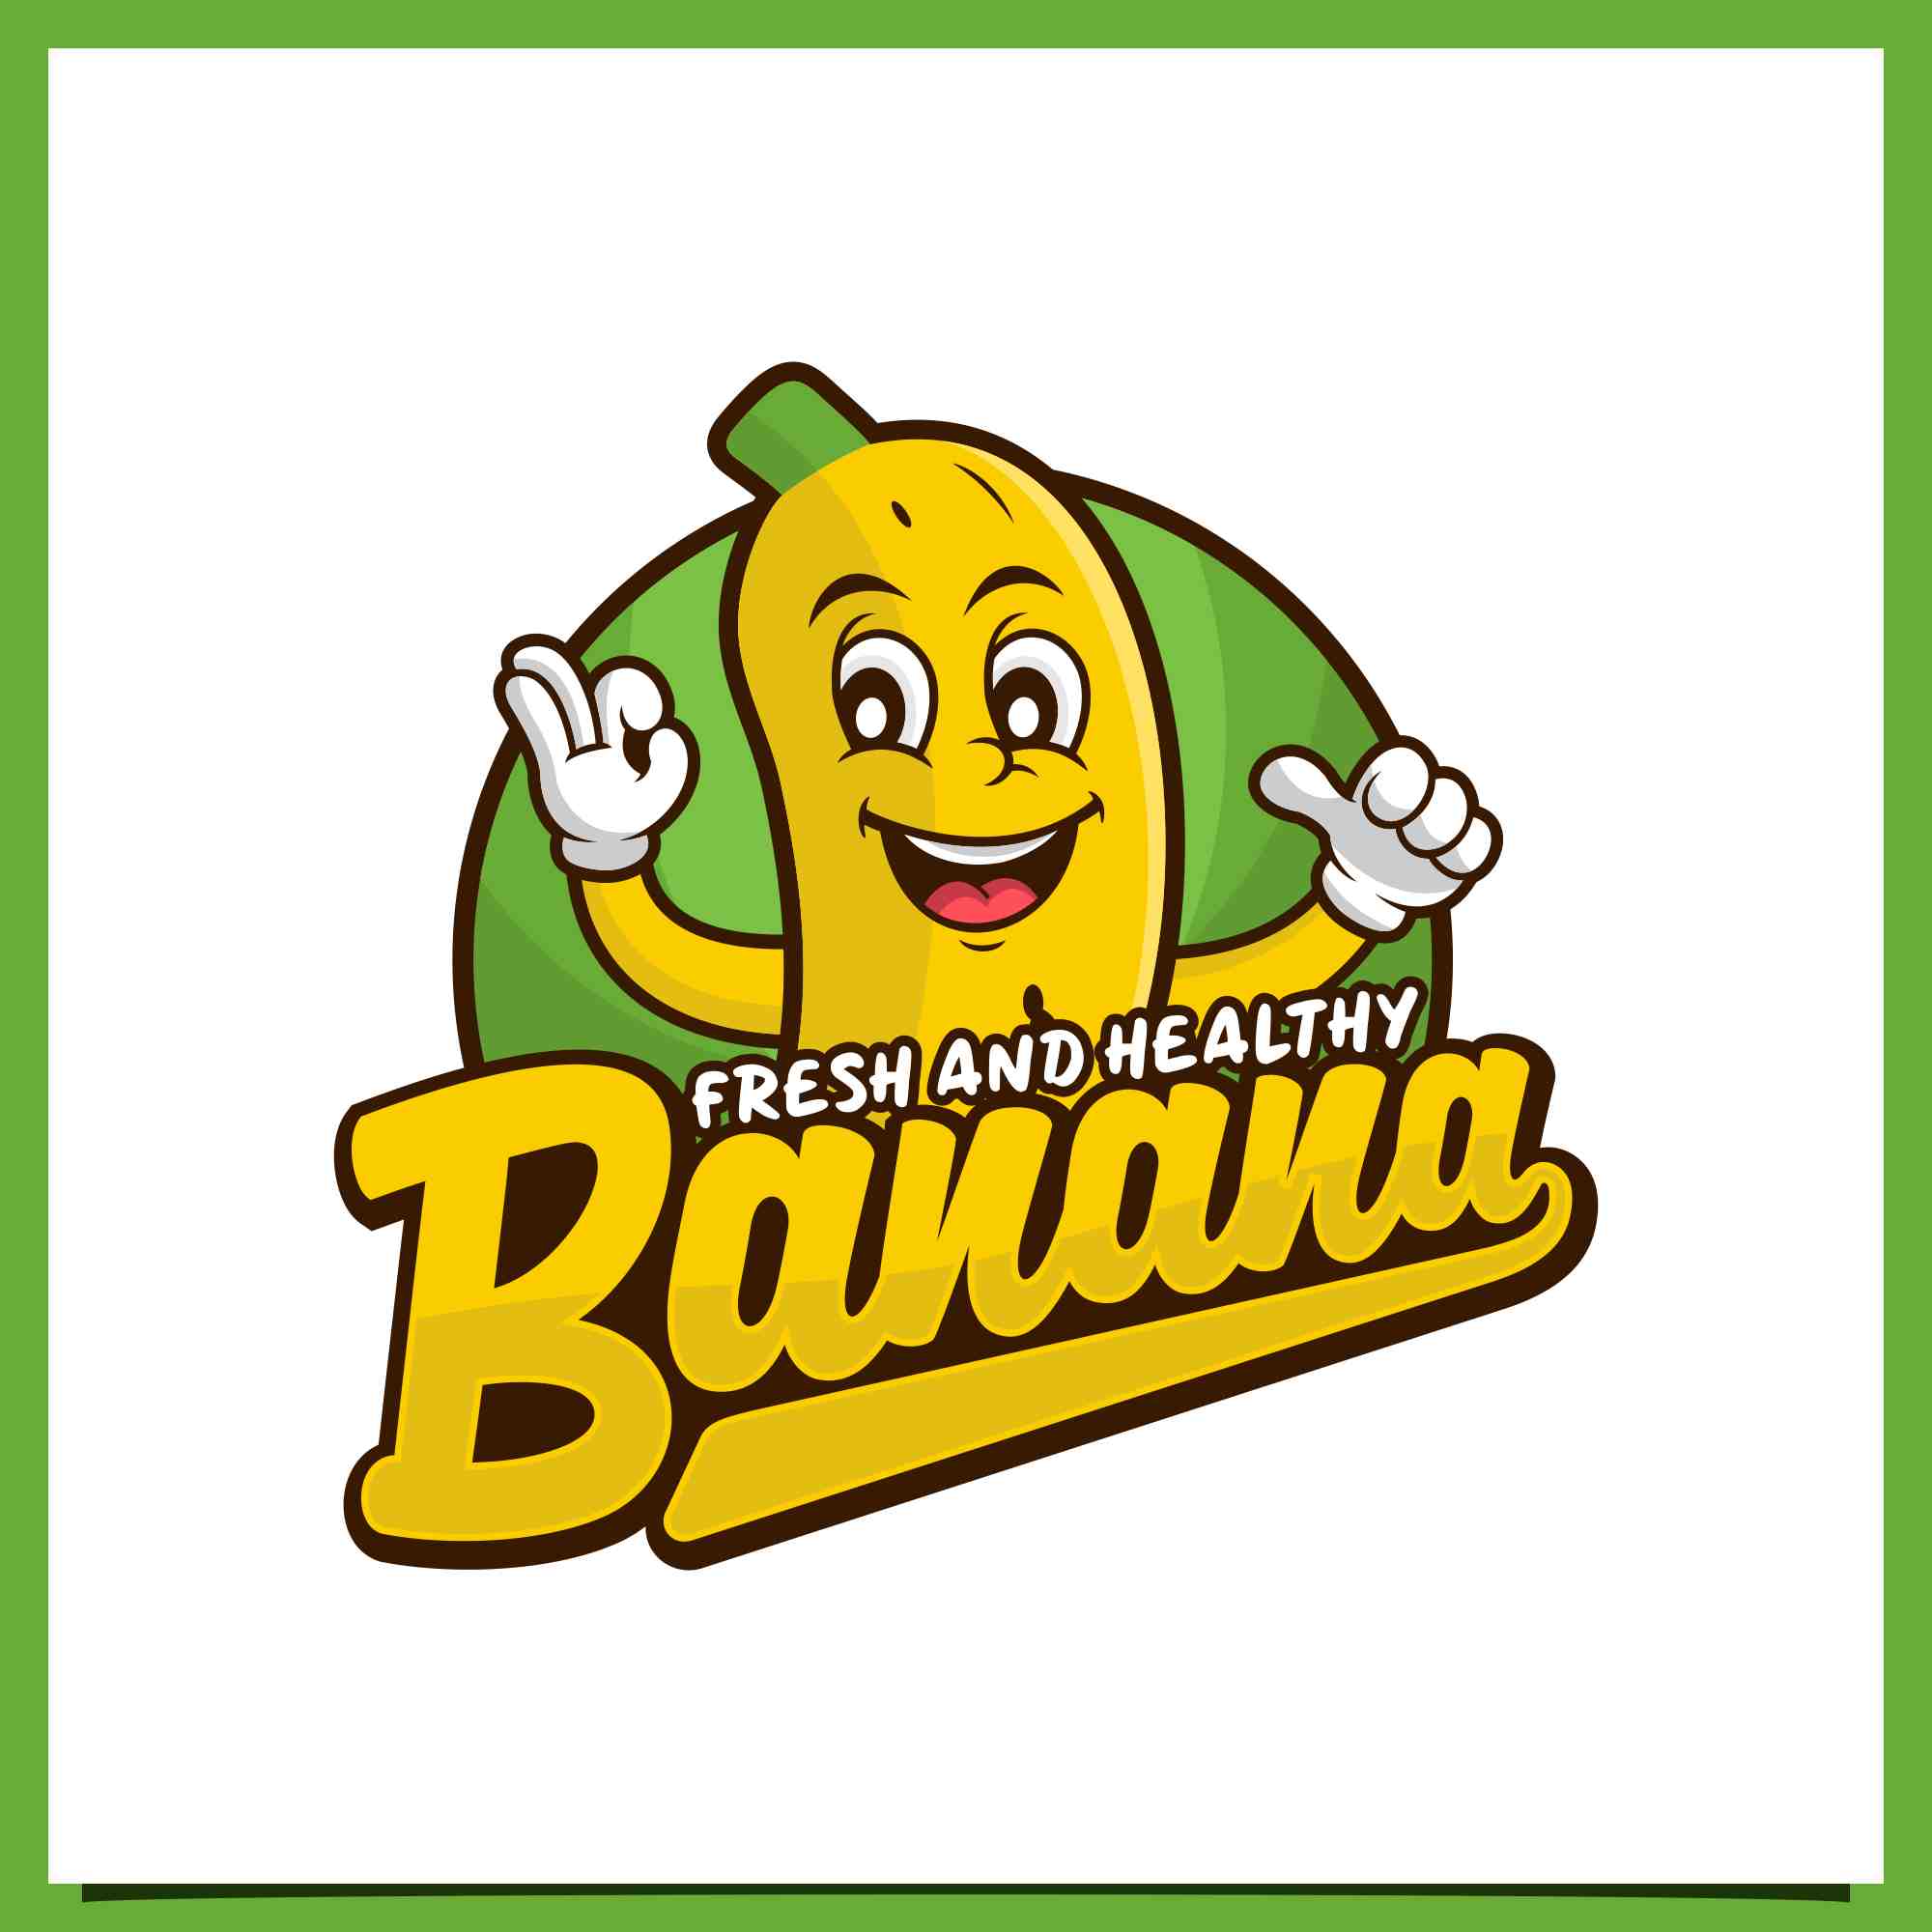 banana mascot fresh and healthy logo design 1 249